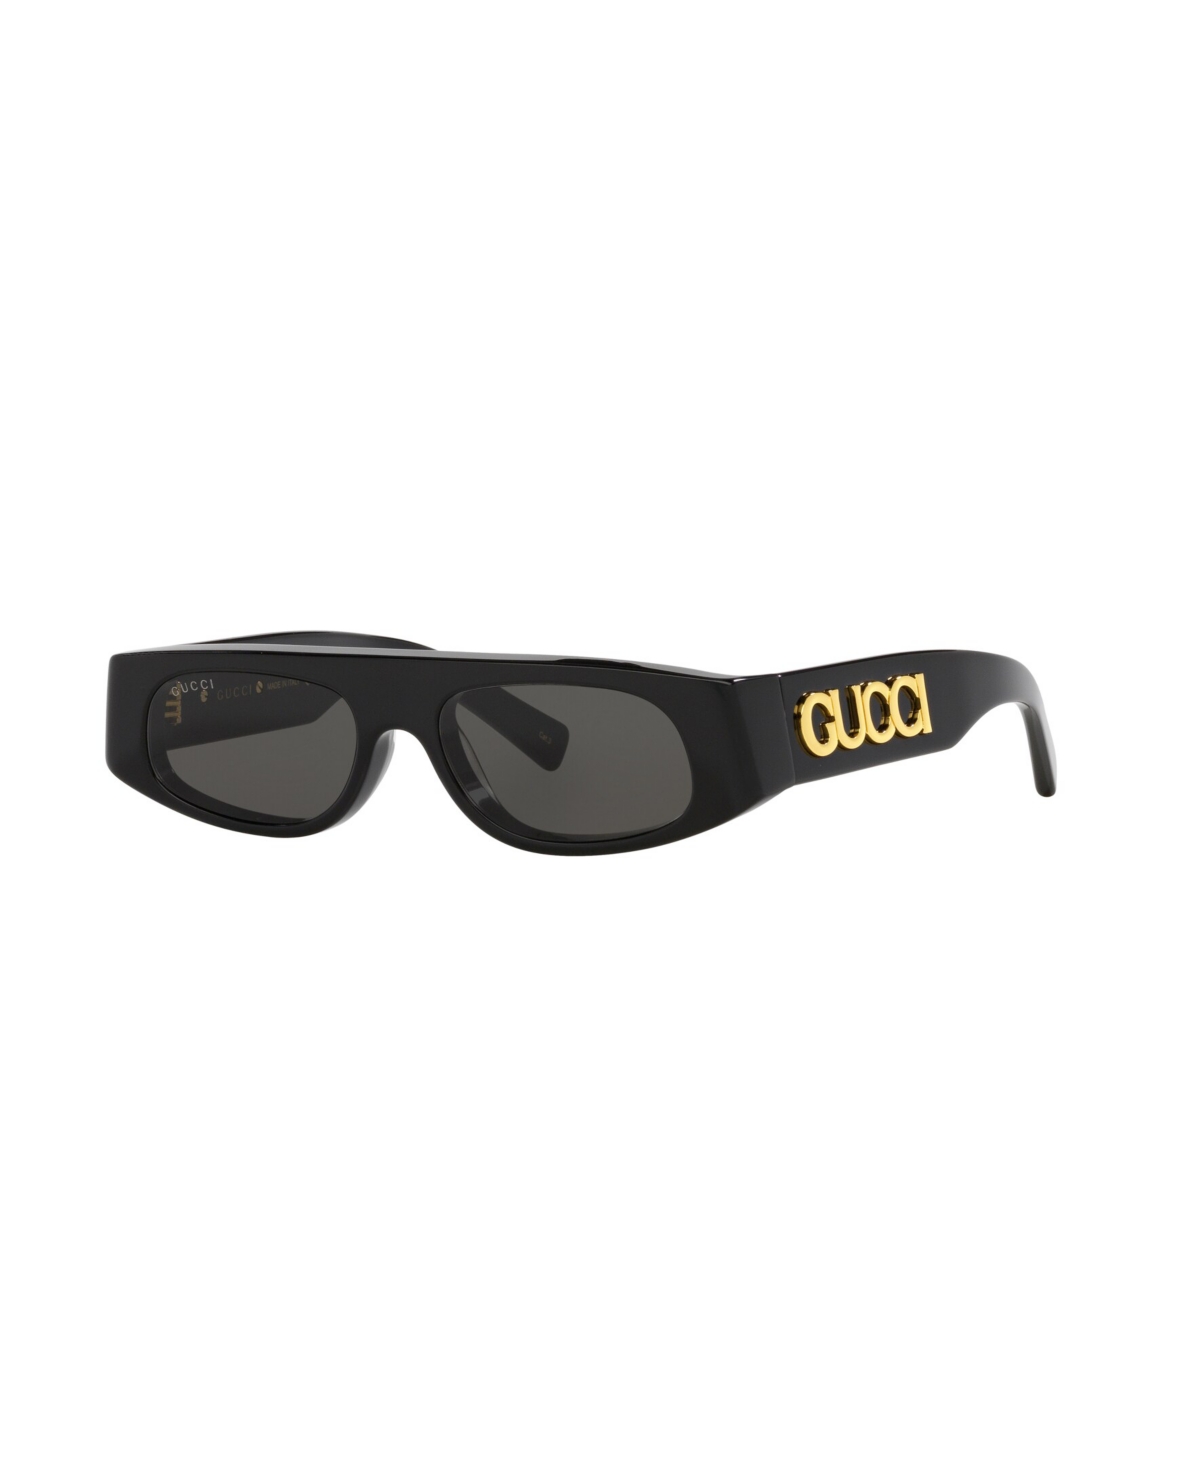 Women's Sunglasses, GG1771S - Black